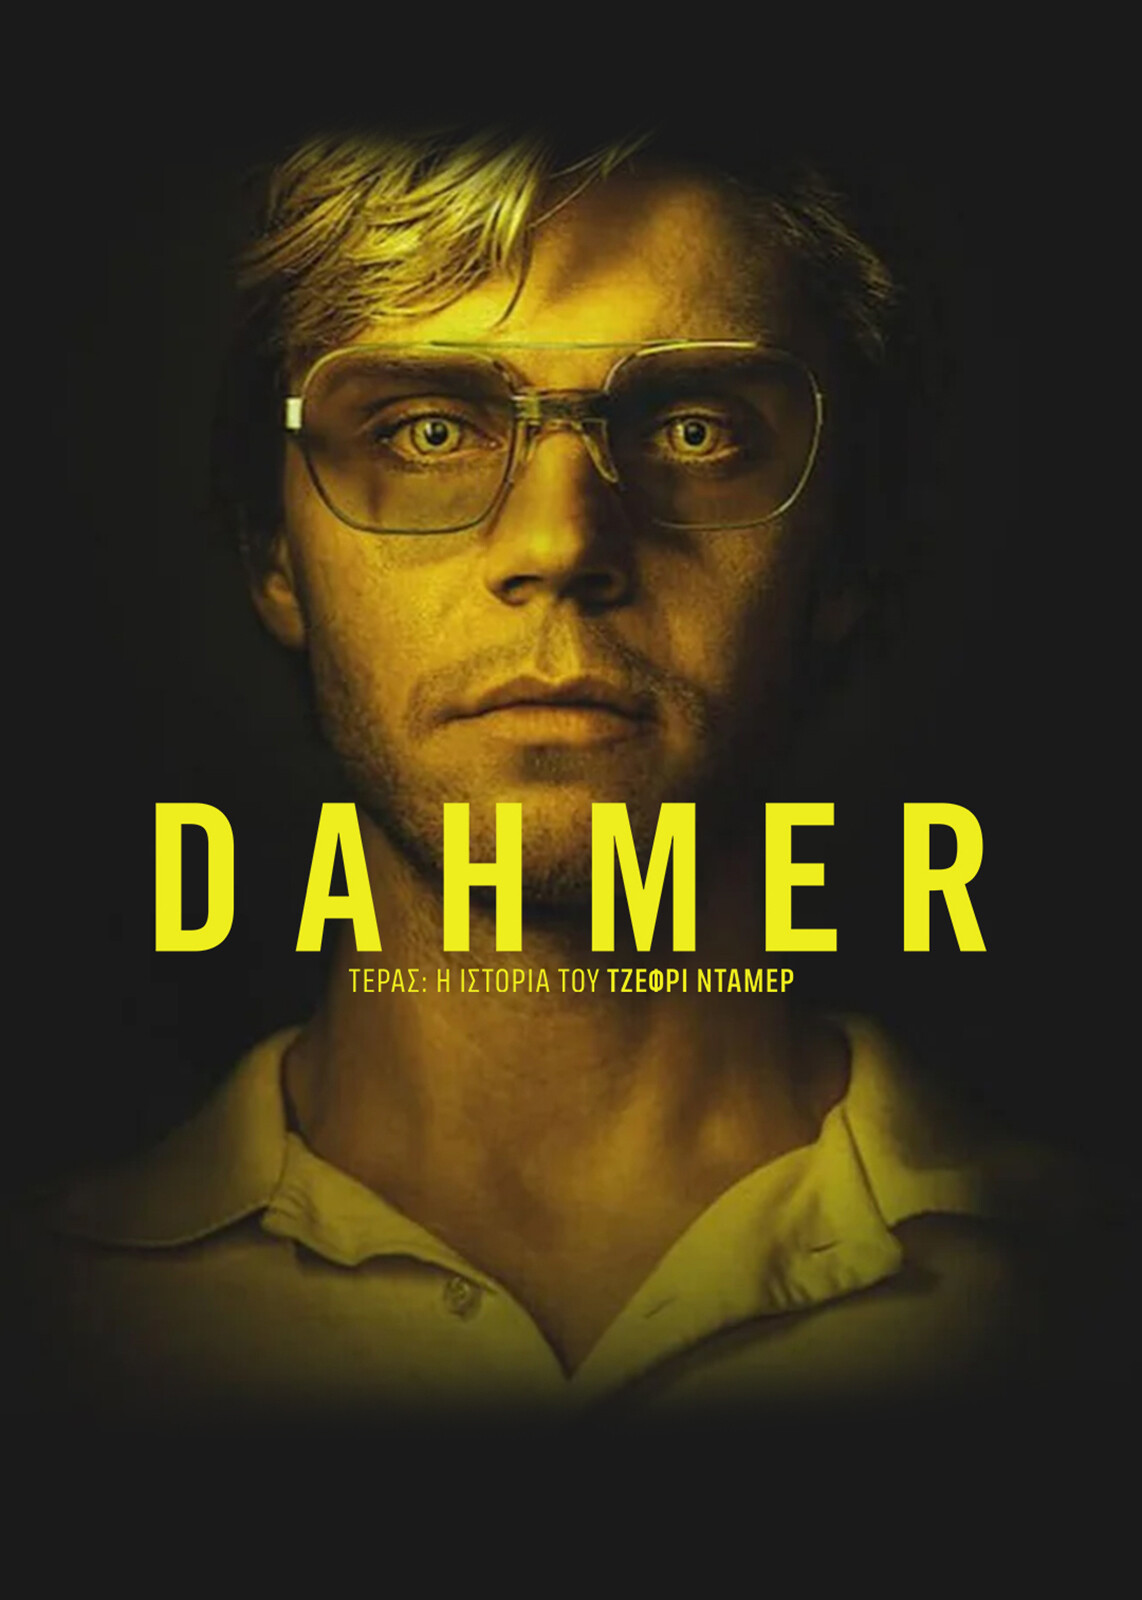 dahmer portrait with glasses